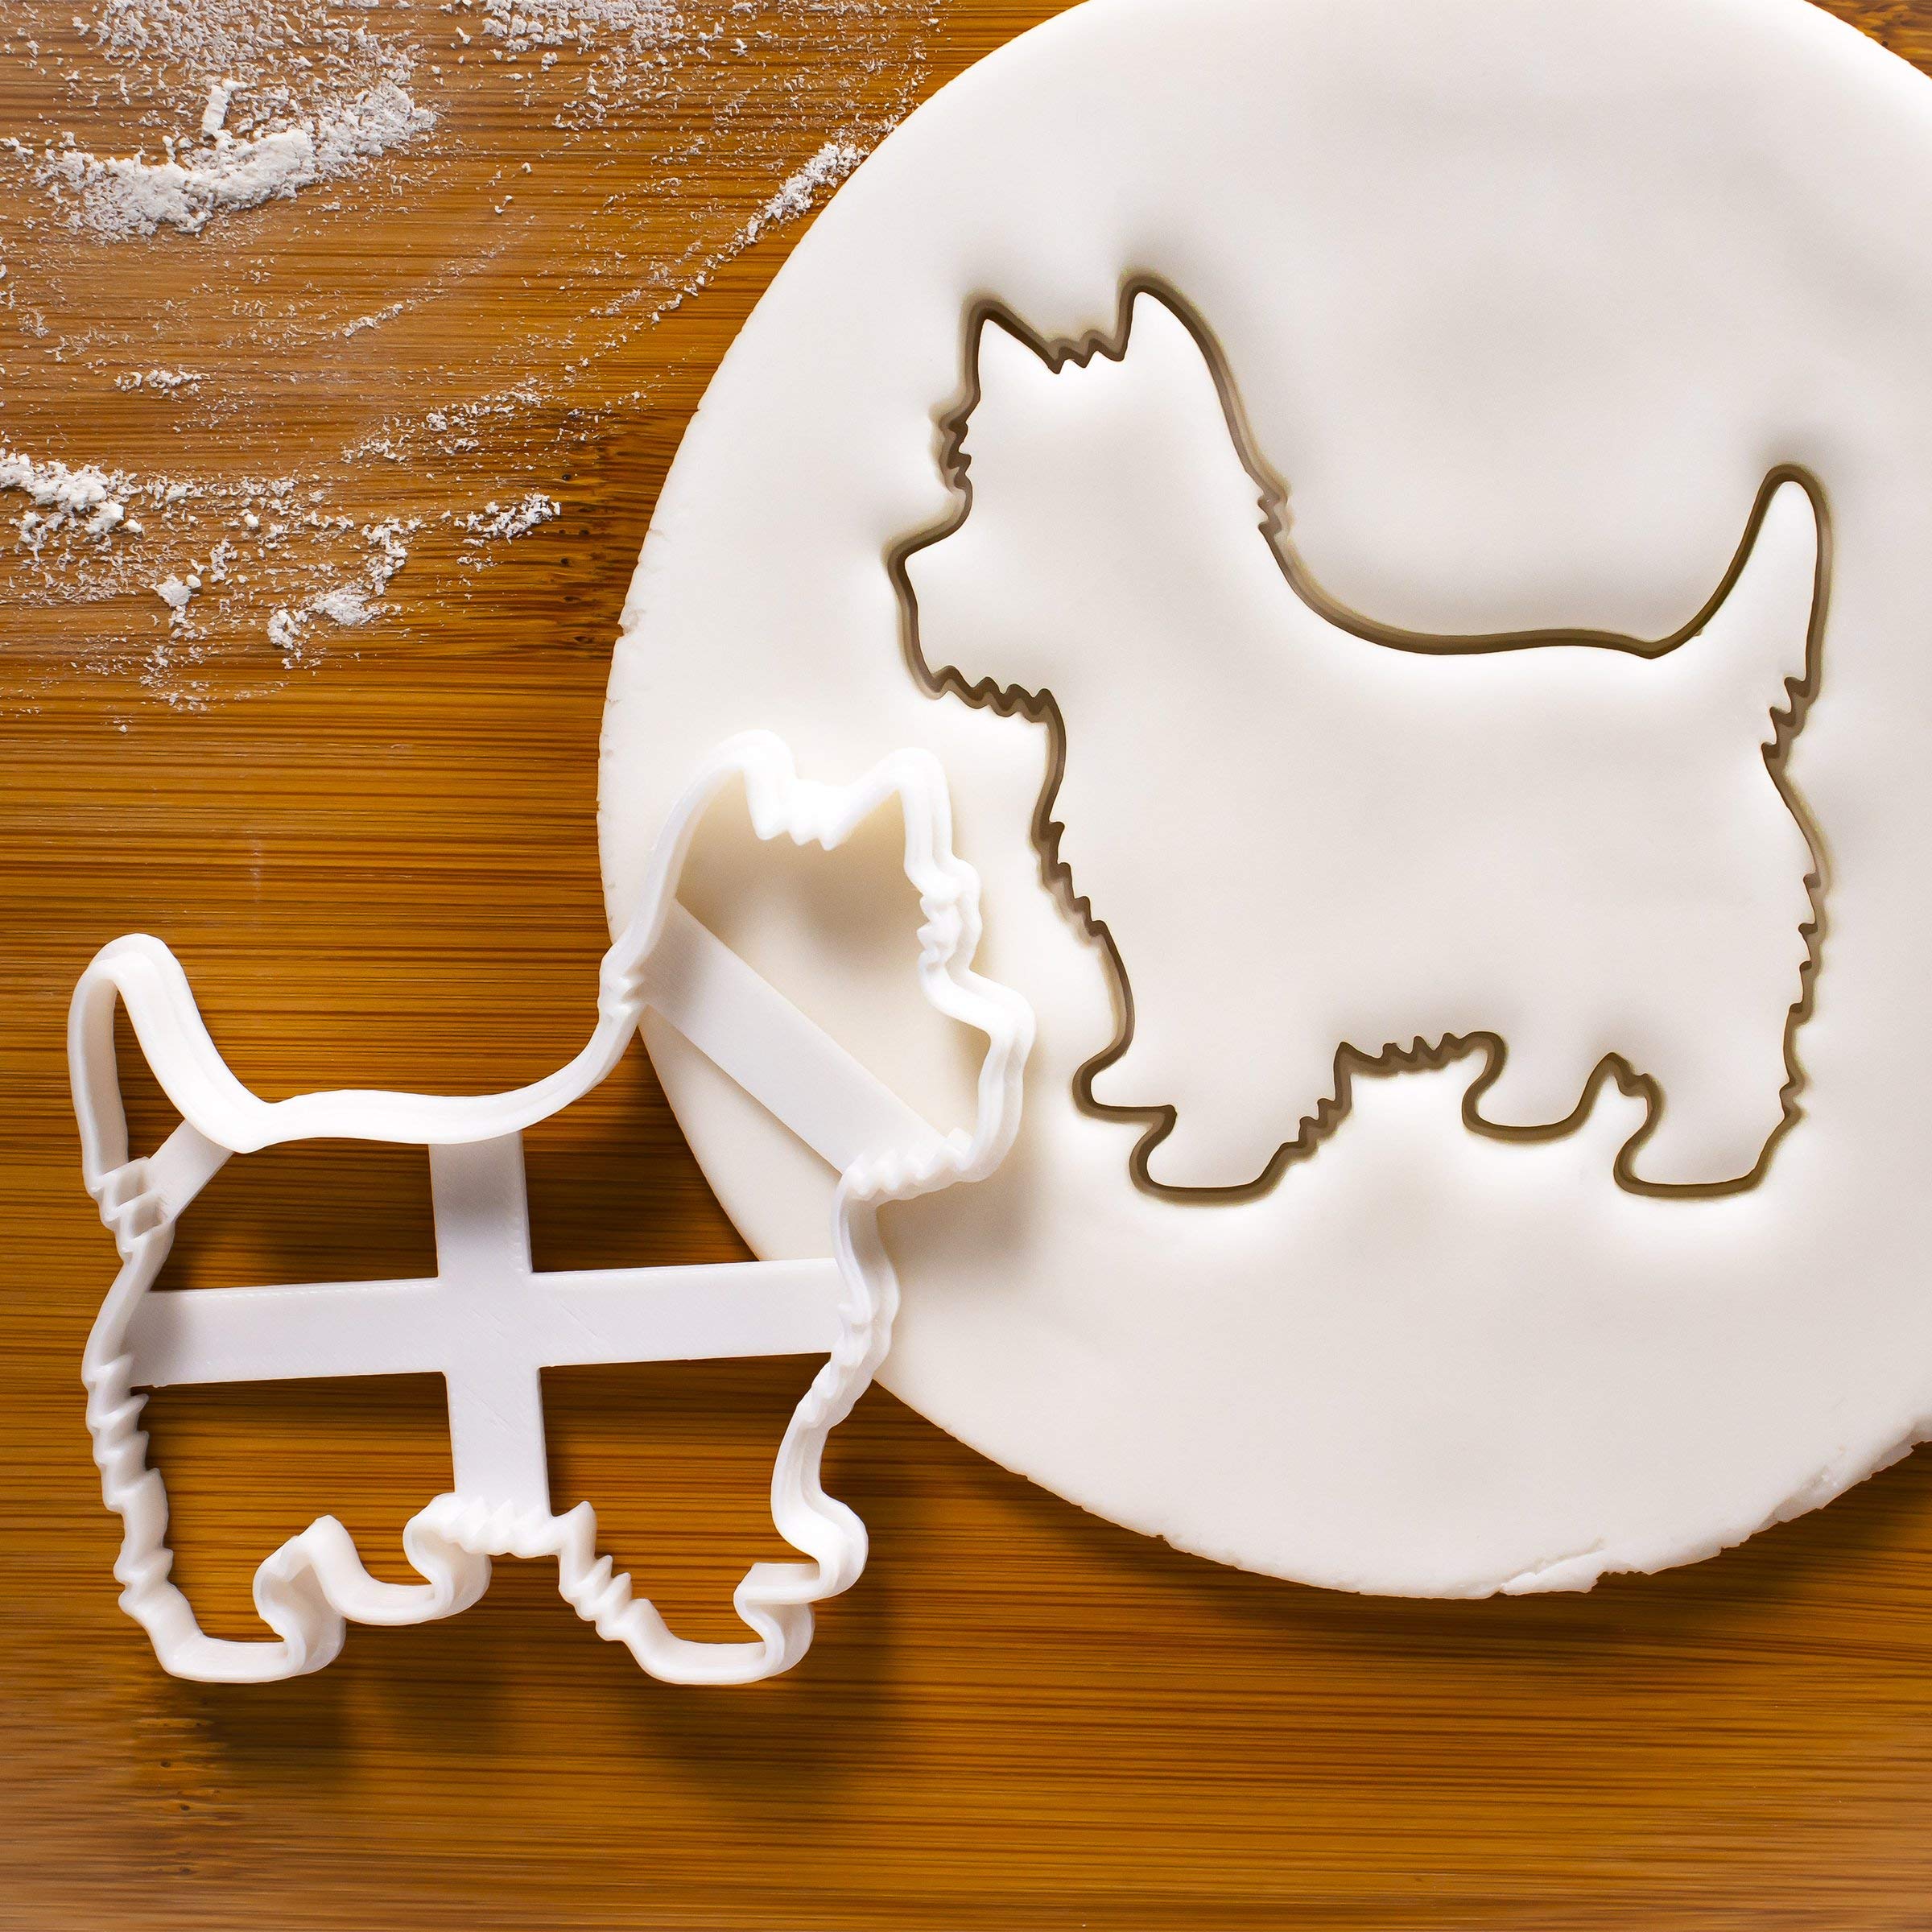 West Highland White Terrier Silhouette cookie cutter, 1 piece - Bakerlogy